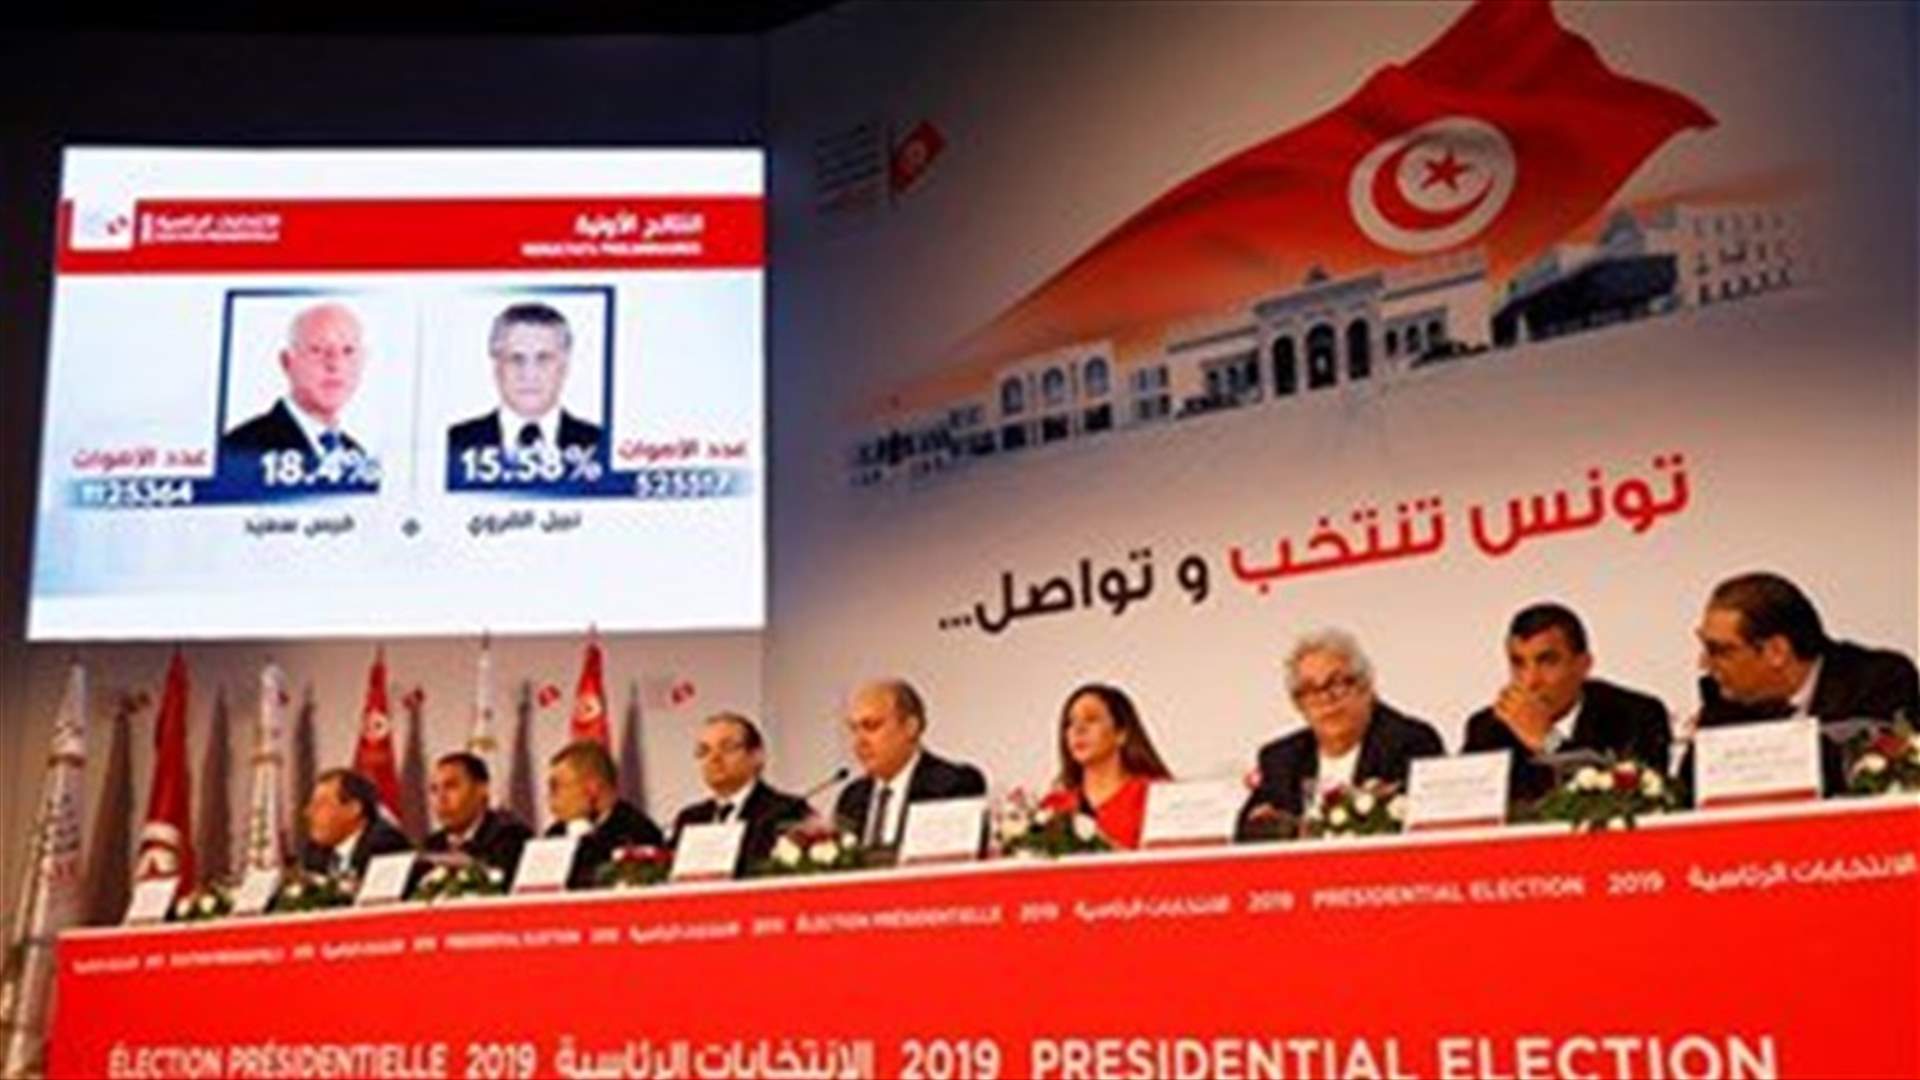 Tunisia confirms Saied and Karoui to contest presidential runoff vote